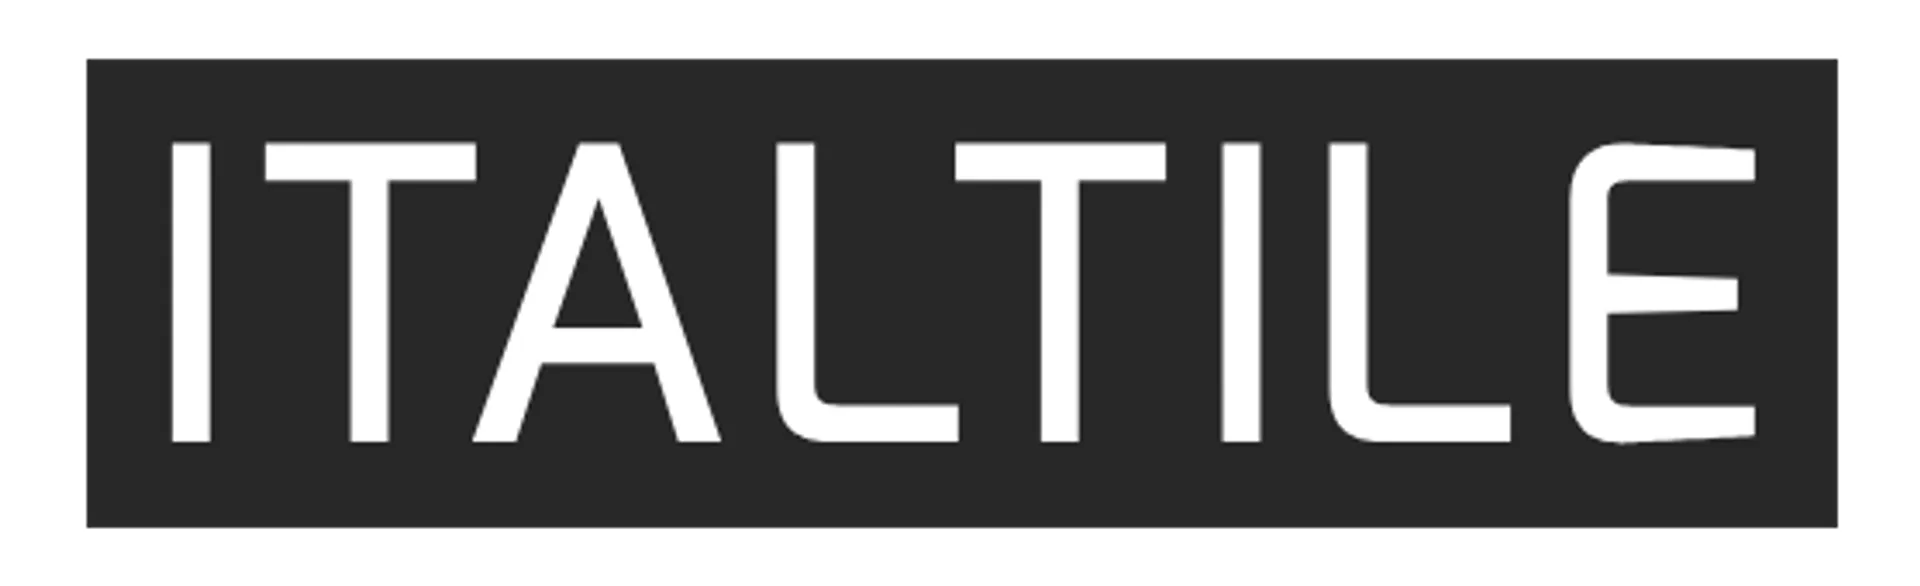 ITALTILE logo. Current catalogue